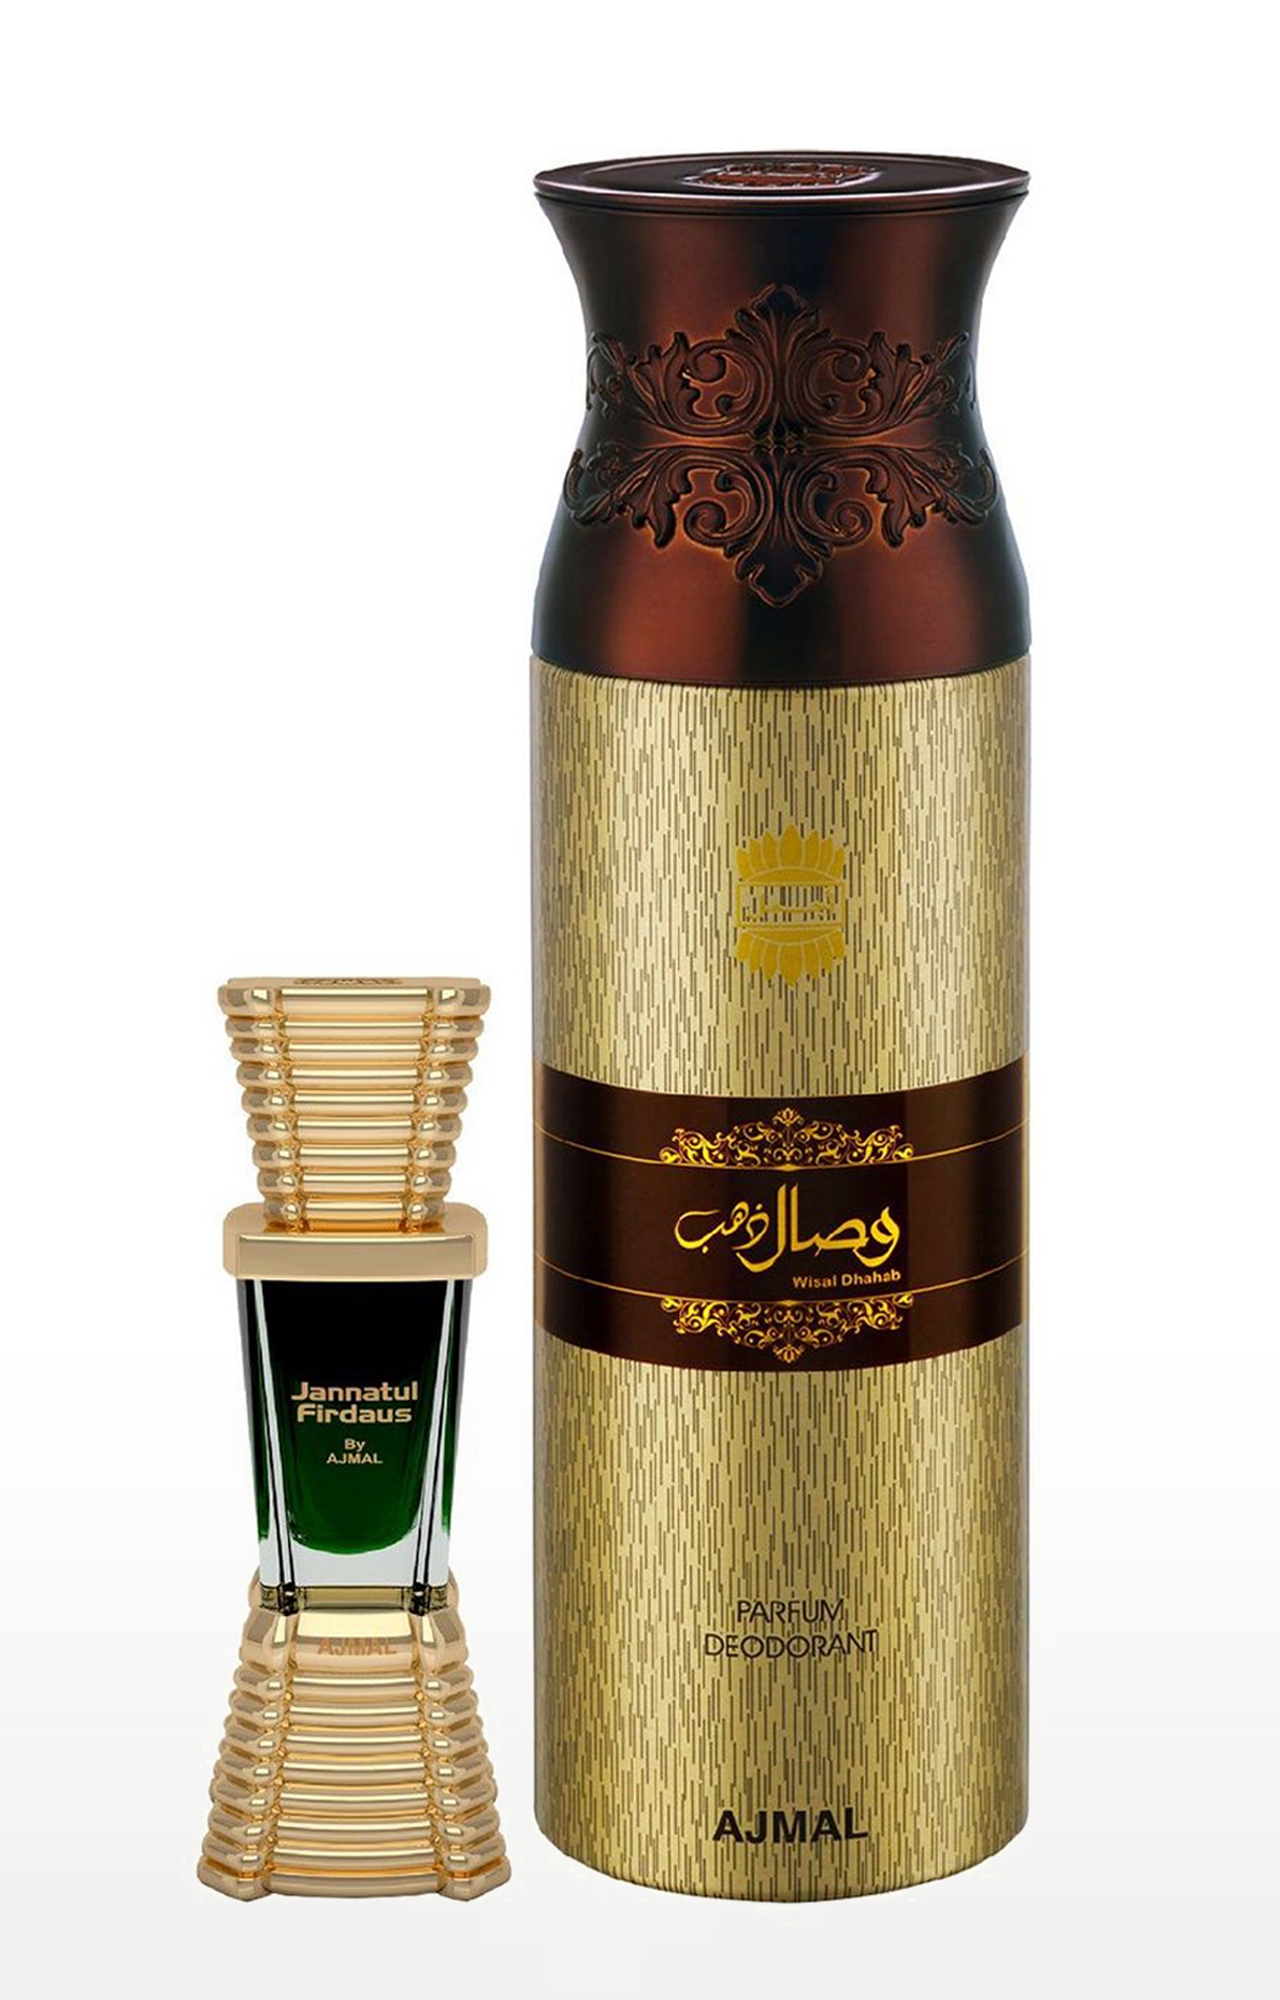 Ajmal | Ajmal Jannatul Firdaus Concentrated Perfume Oil Oriental Alcohol-free Attar 10ml for Unisex and Wisal Dhahab Deodorant Fruity Fragrance 200ml for Men 0